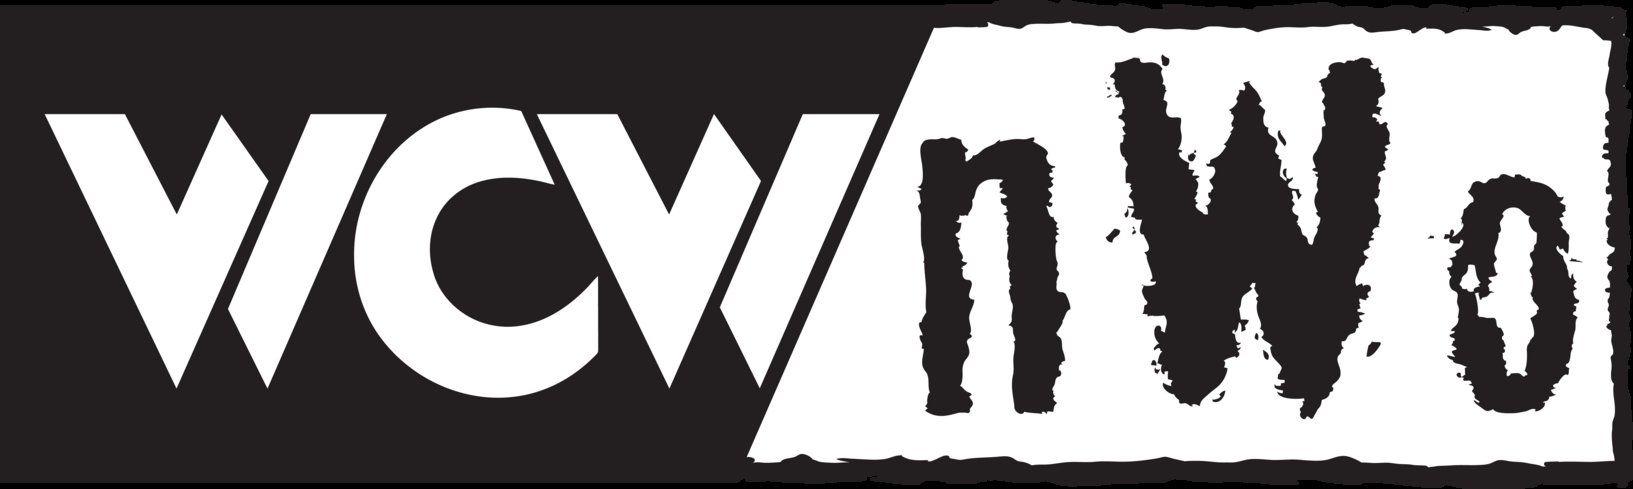 WCW Logo - WCW / nWo Logo by B1ueChr1s on DeviantArt